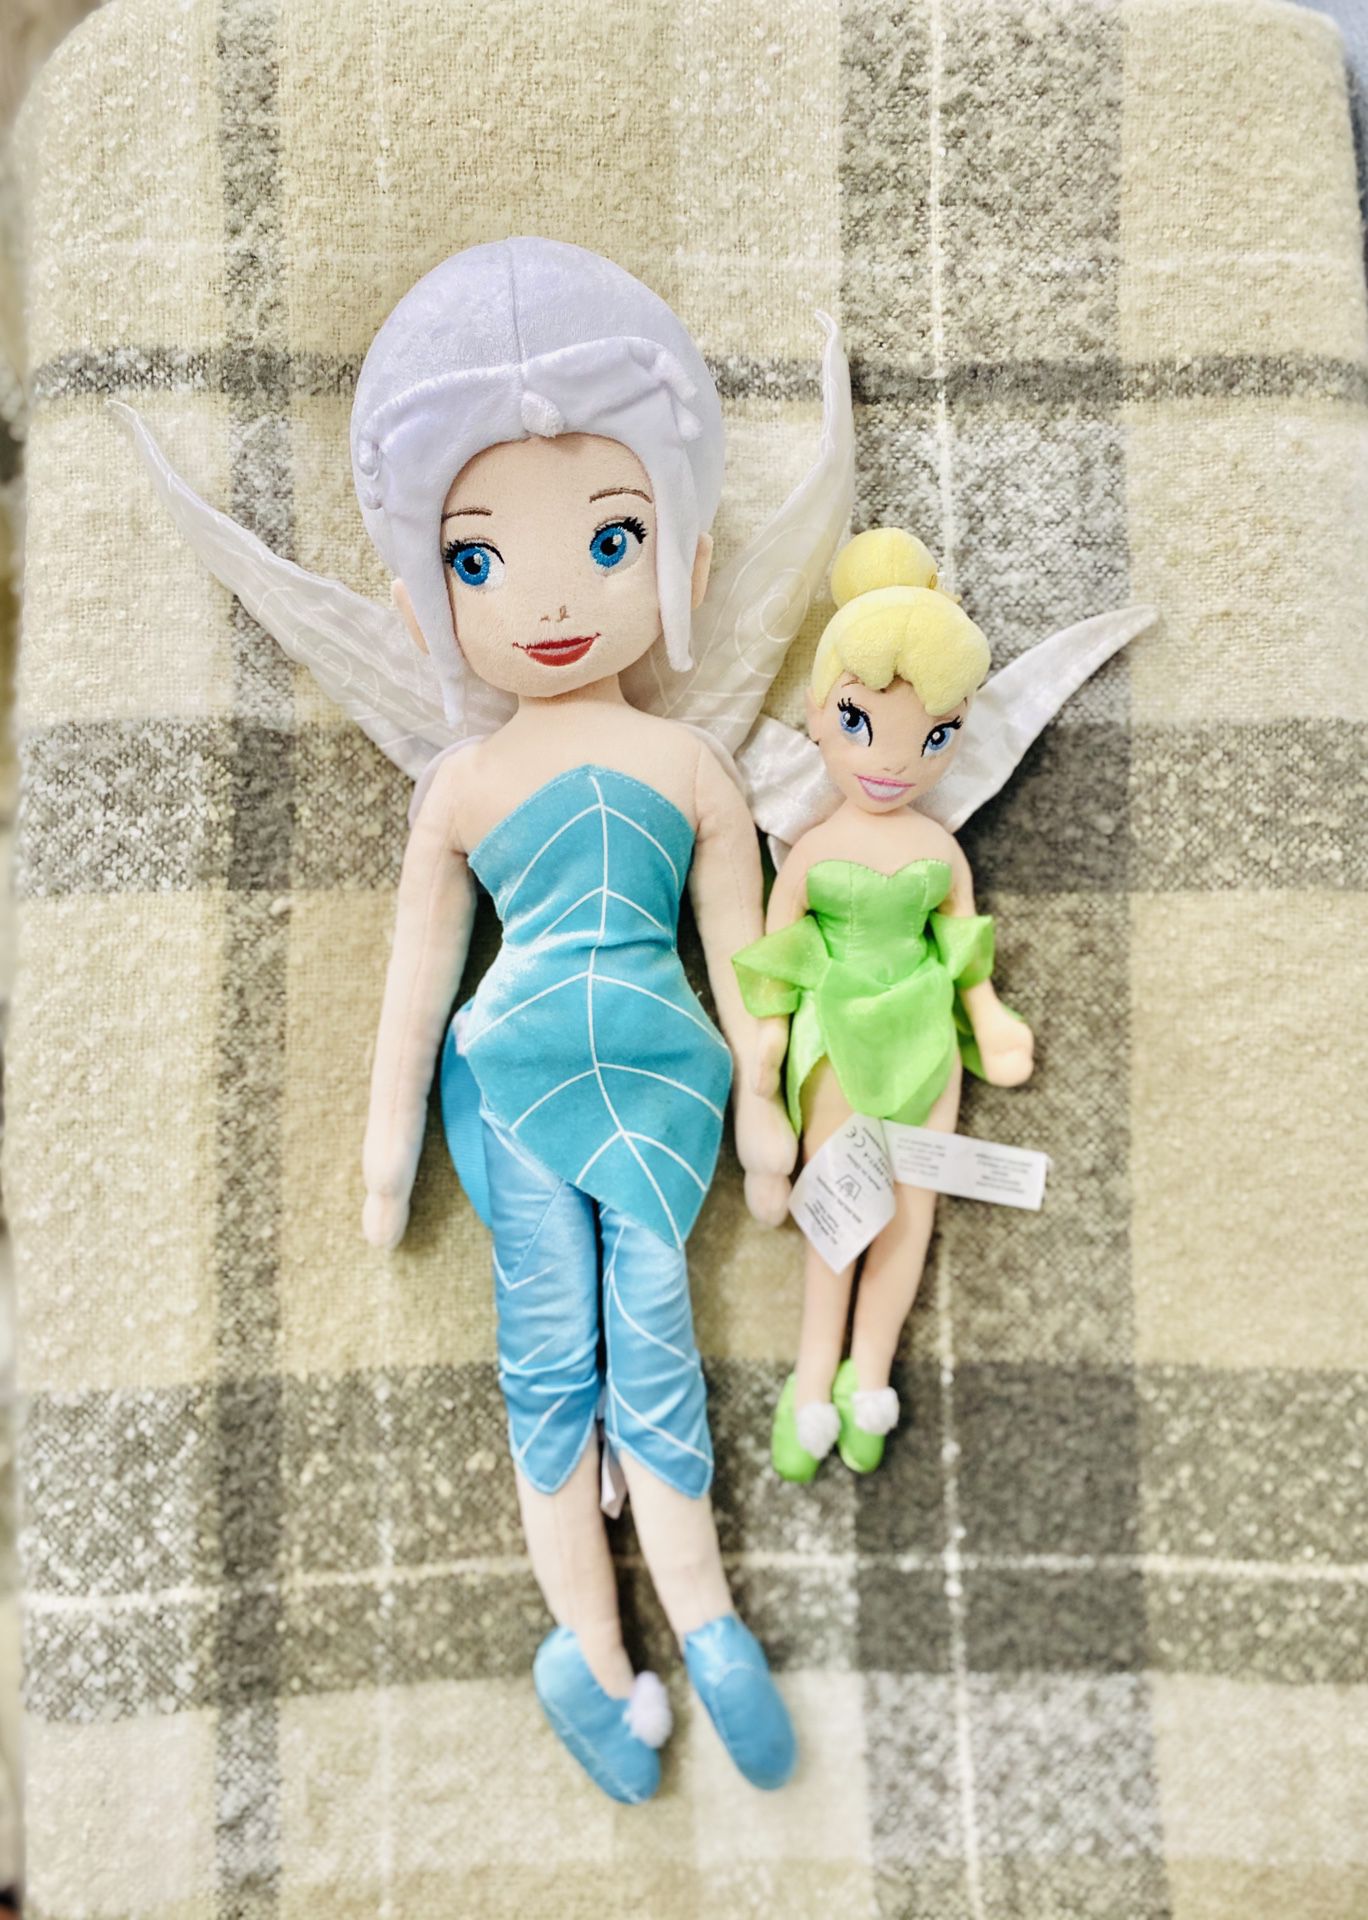 Disney Periwinkle & Tinker plush dolls